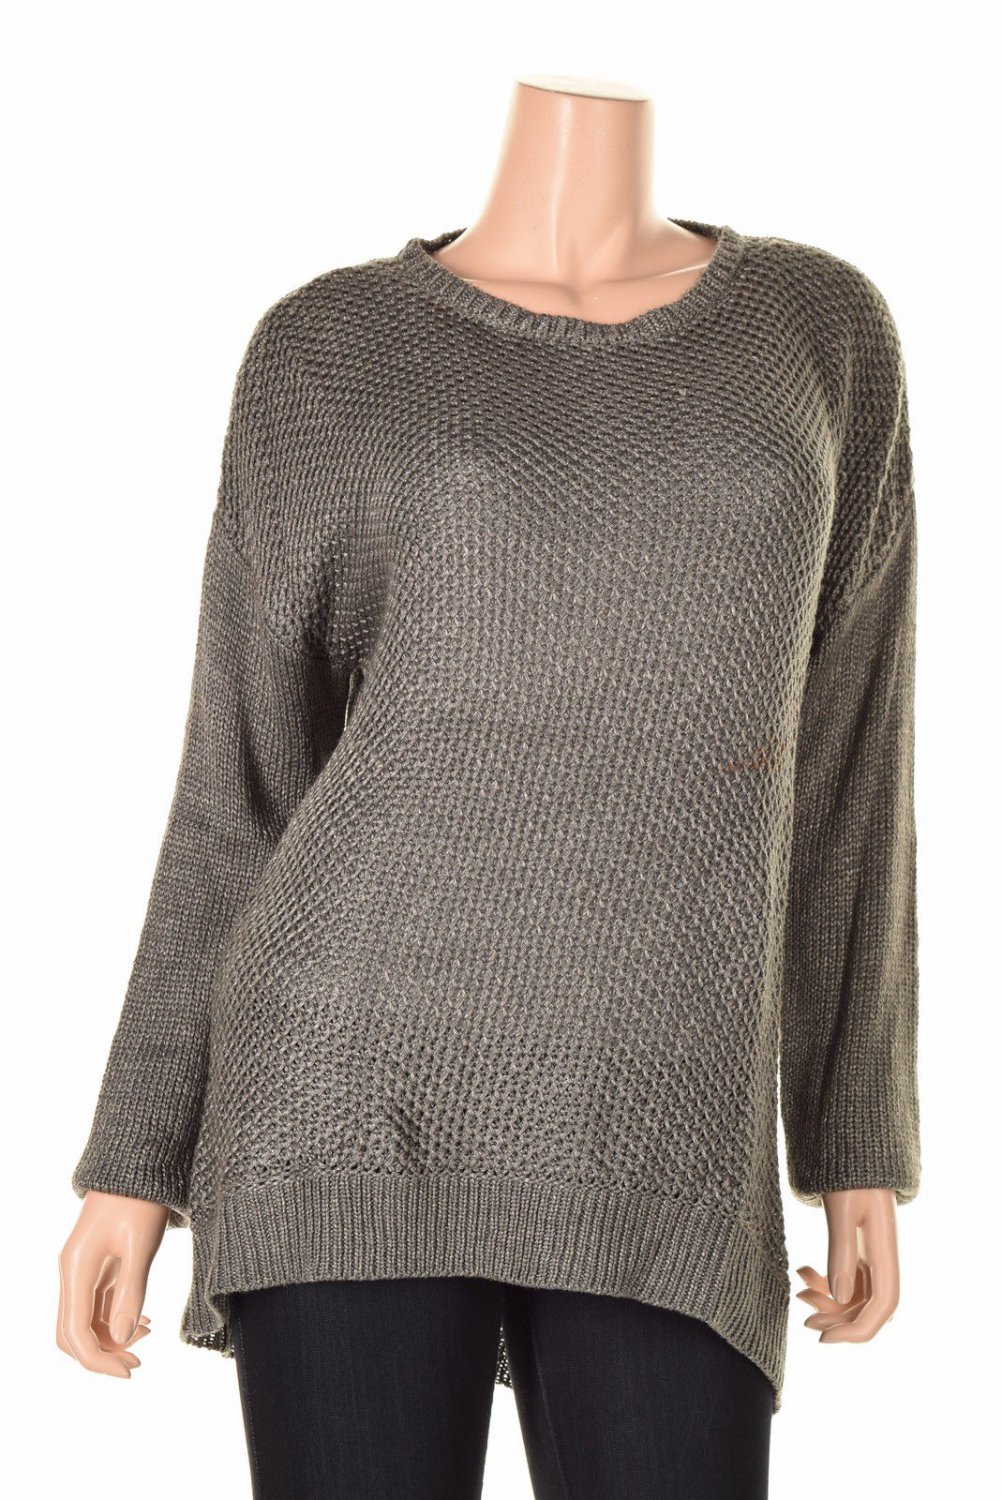 Grace Elements Gray Women's Clothing Size Xl Sweater , Sale